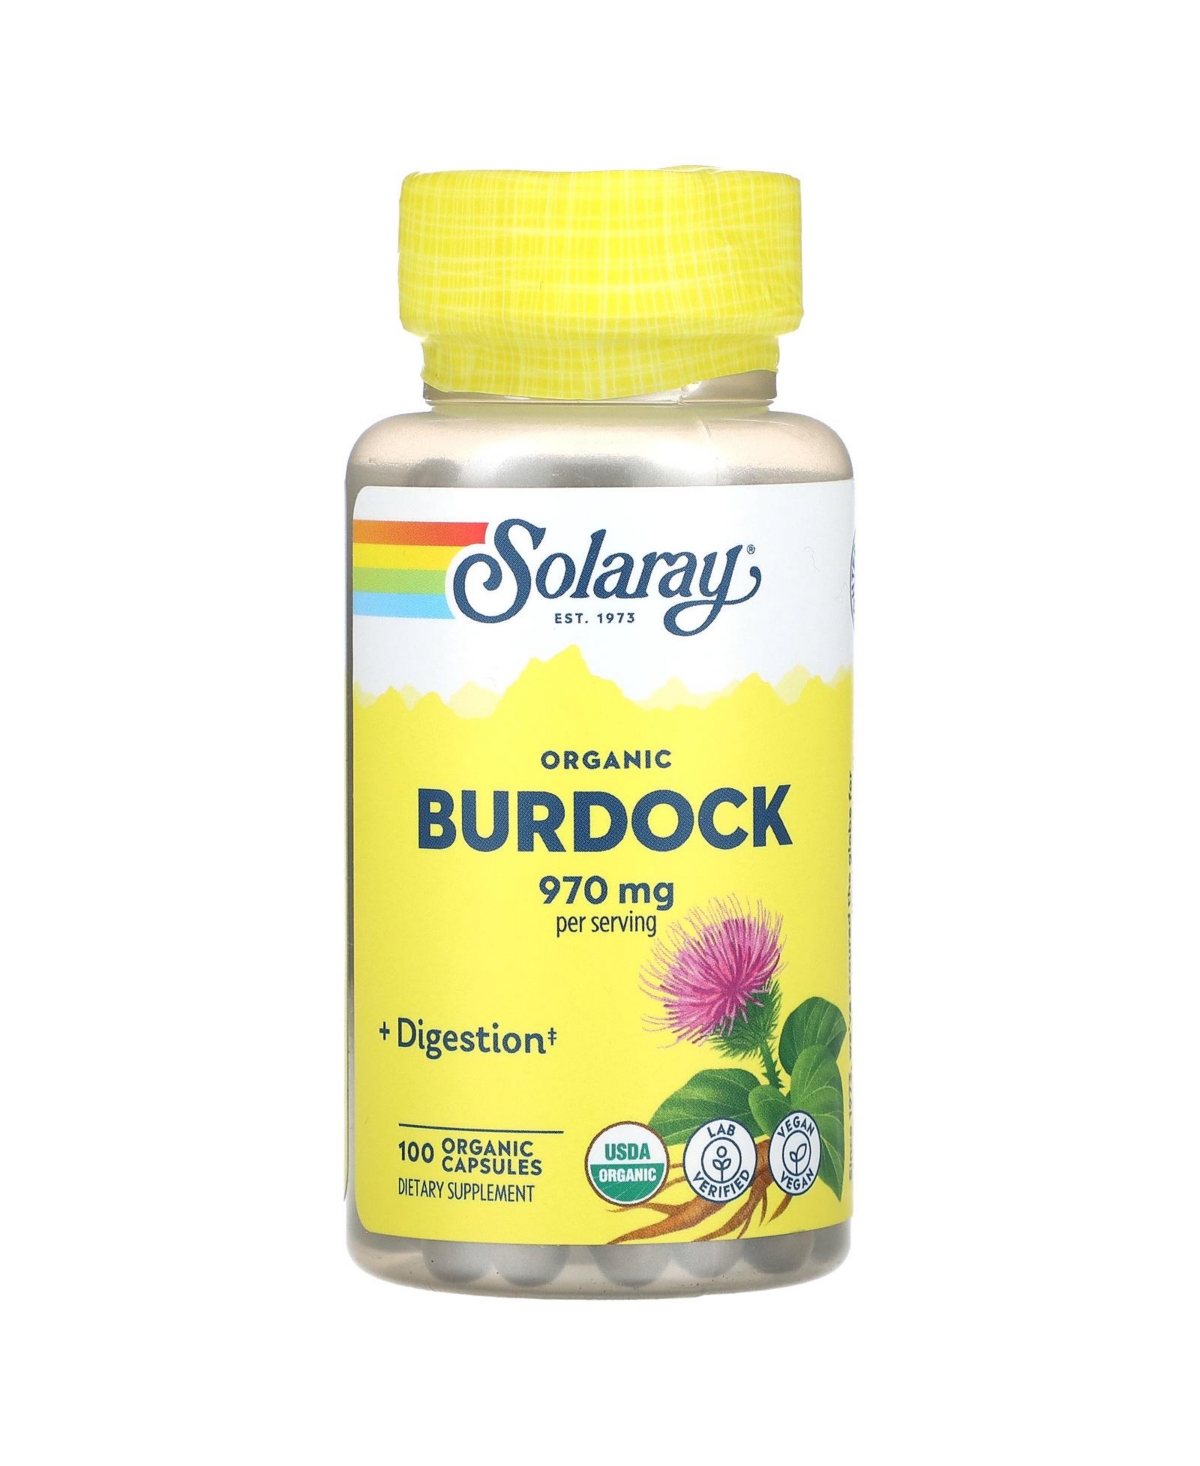 Organic Burdock 970 mg - 100 Organic Capsules (485 mg per Capsule) - Assorted Pre-pack (See Table